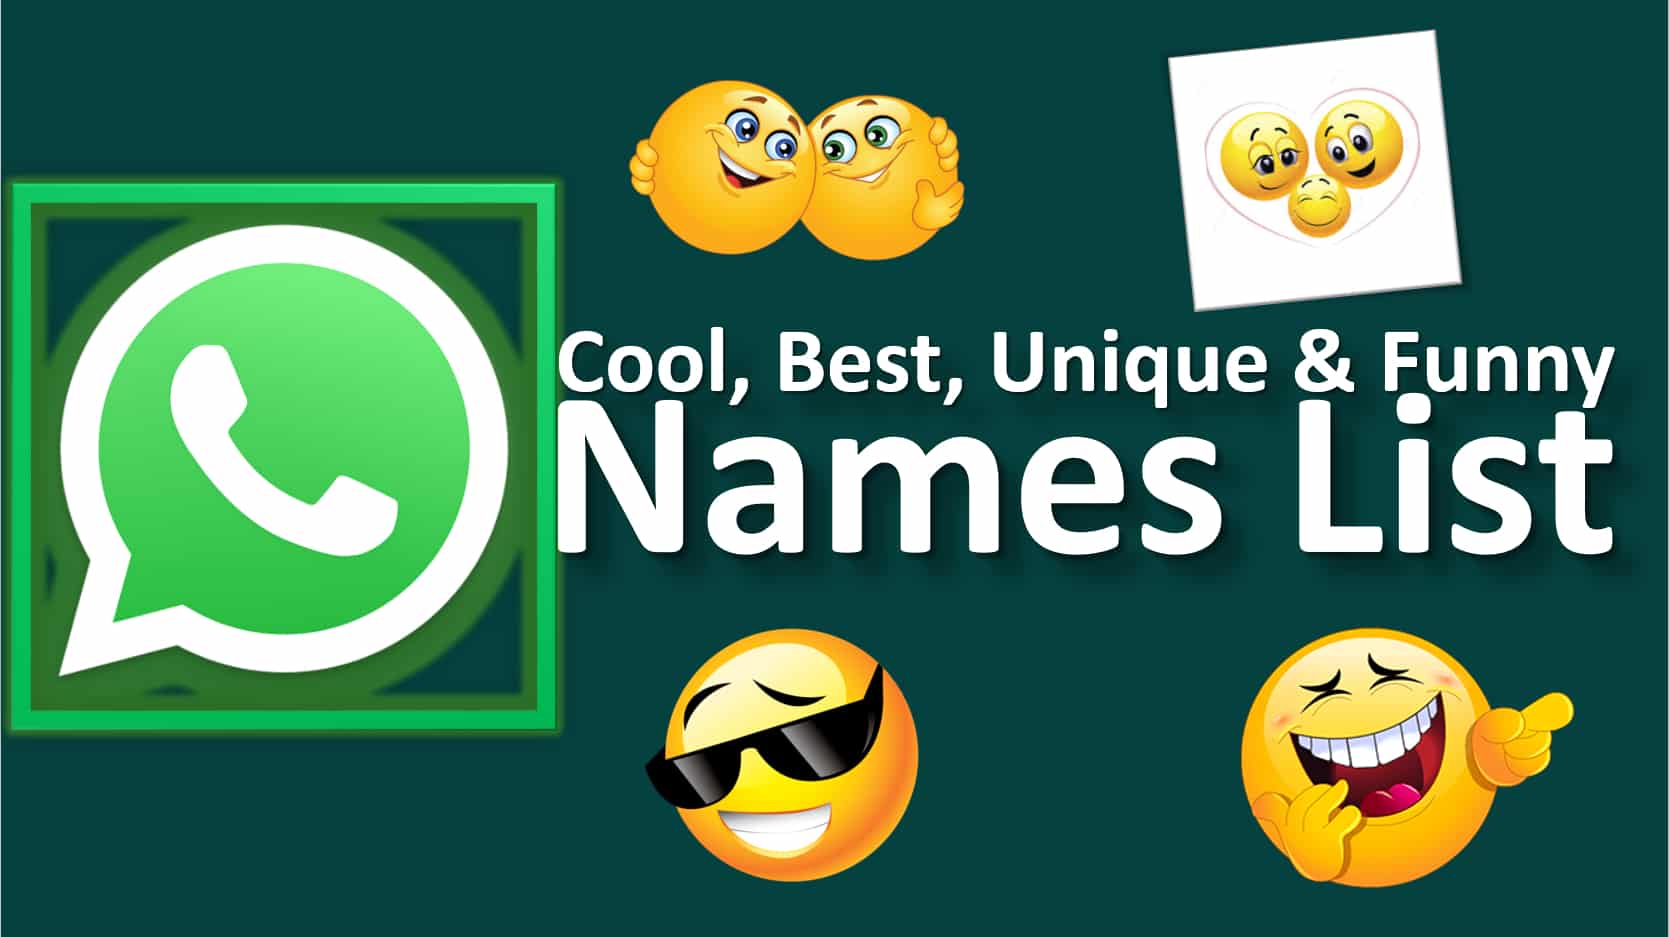 Cool Whatsapp Group Names List